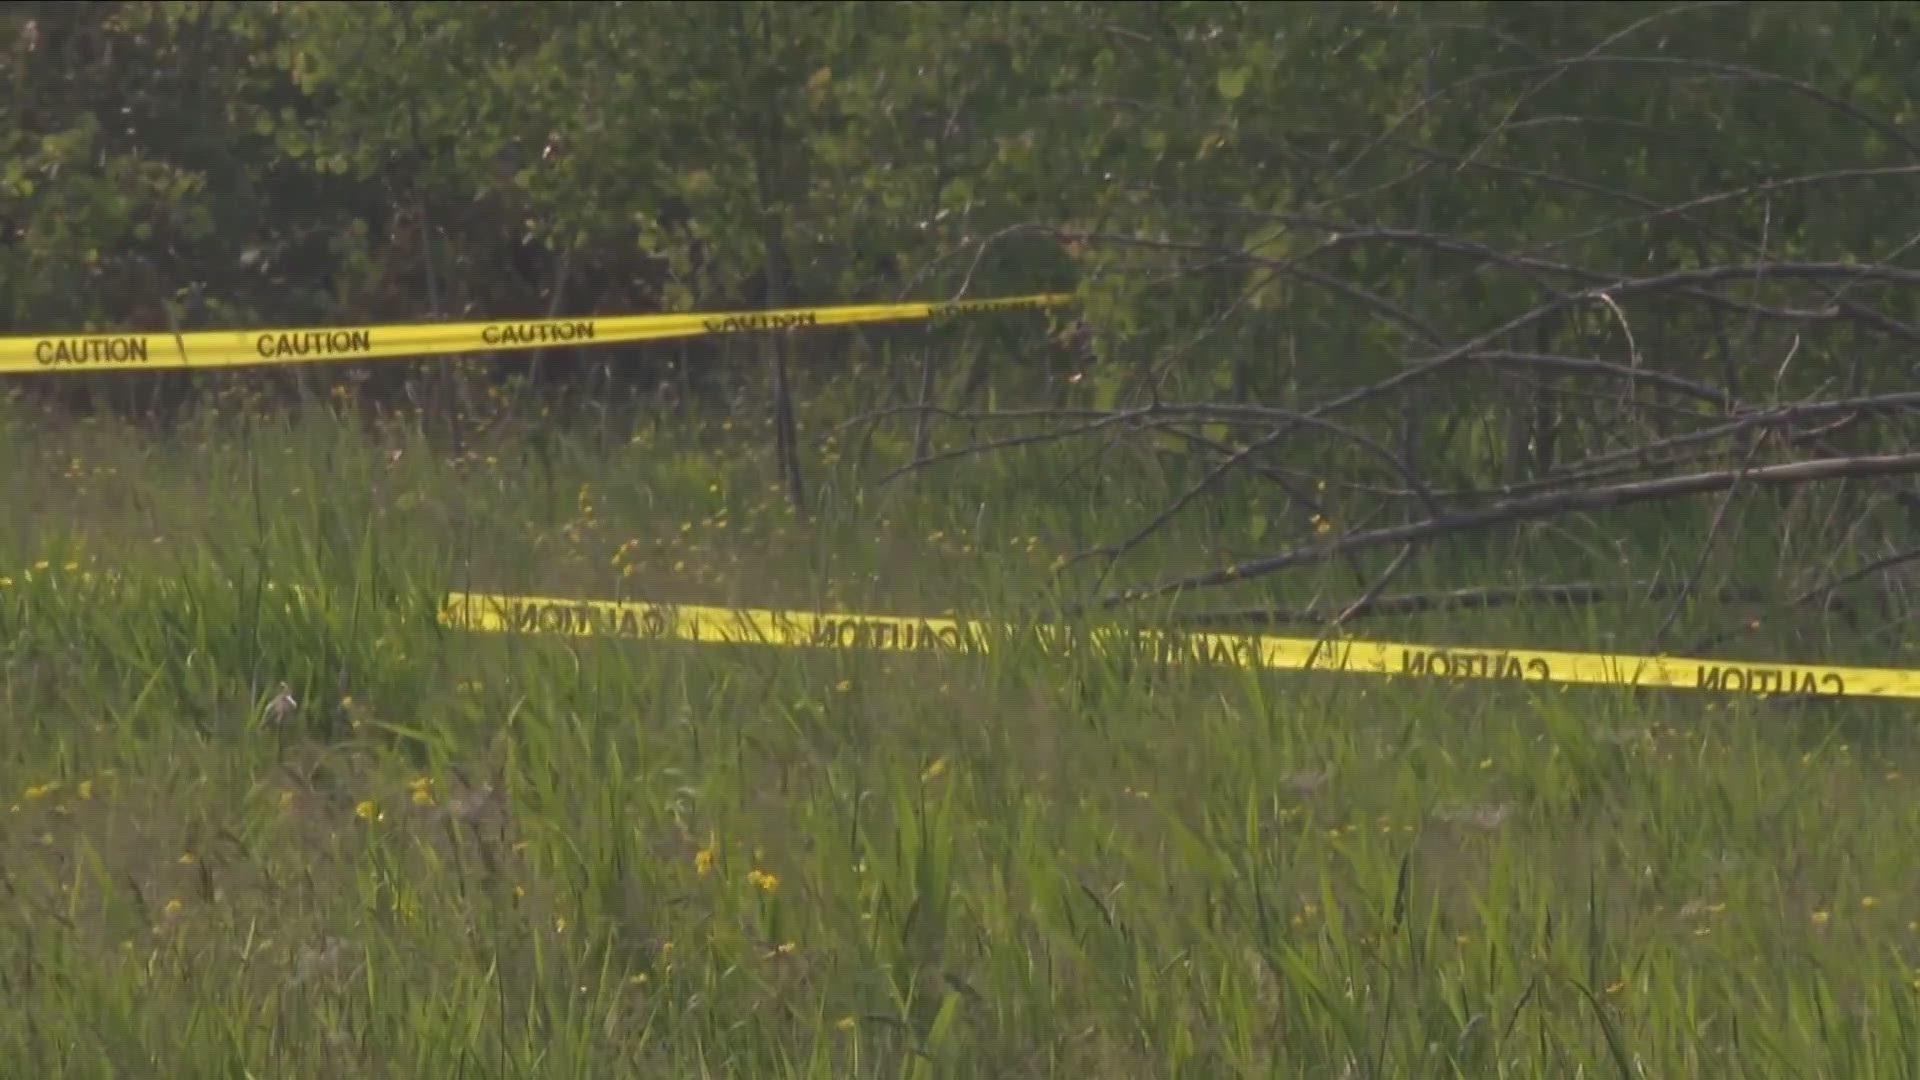 Deadly small plane crash in Jamestown is under investigation